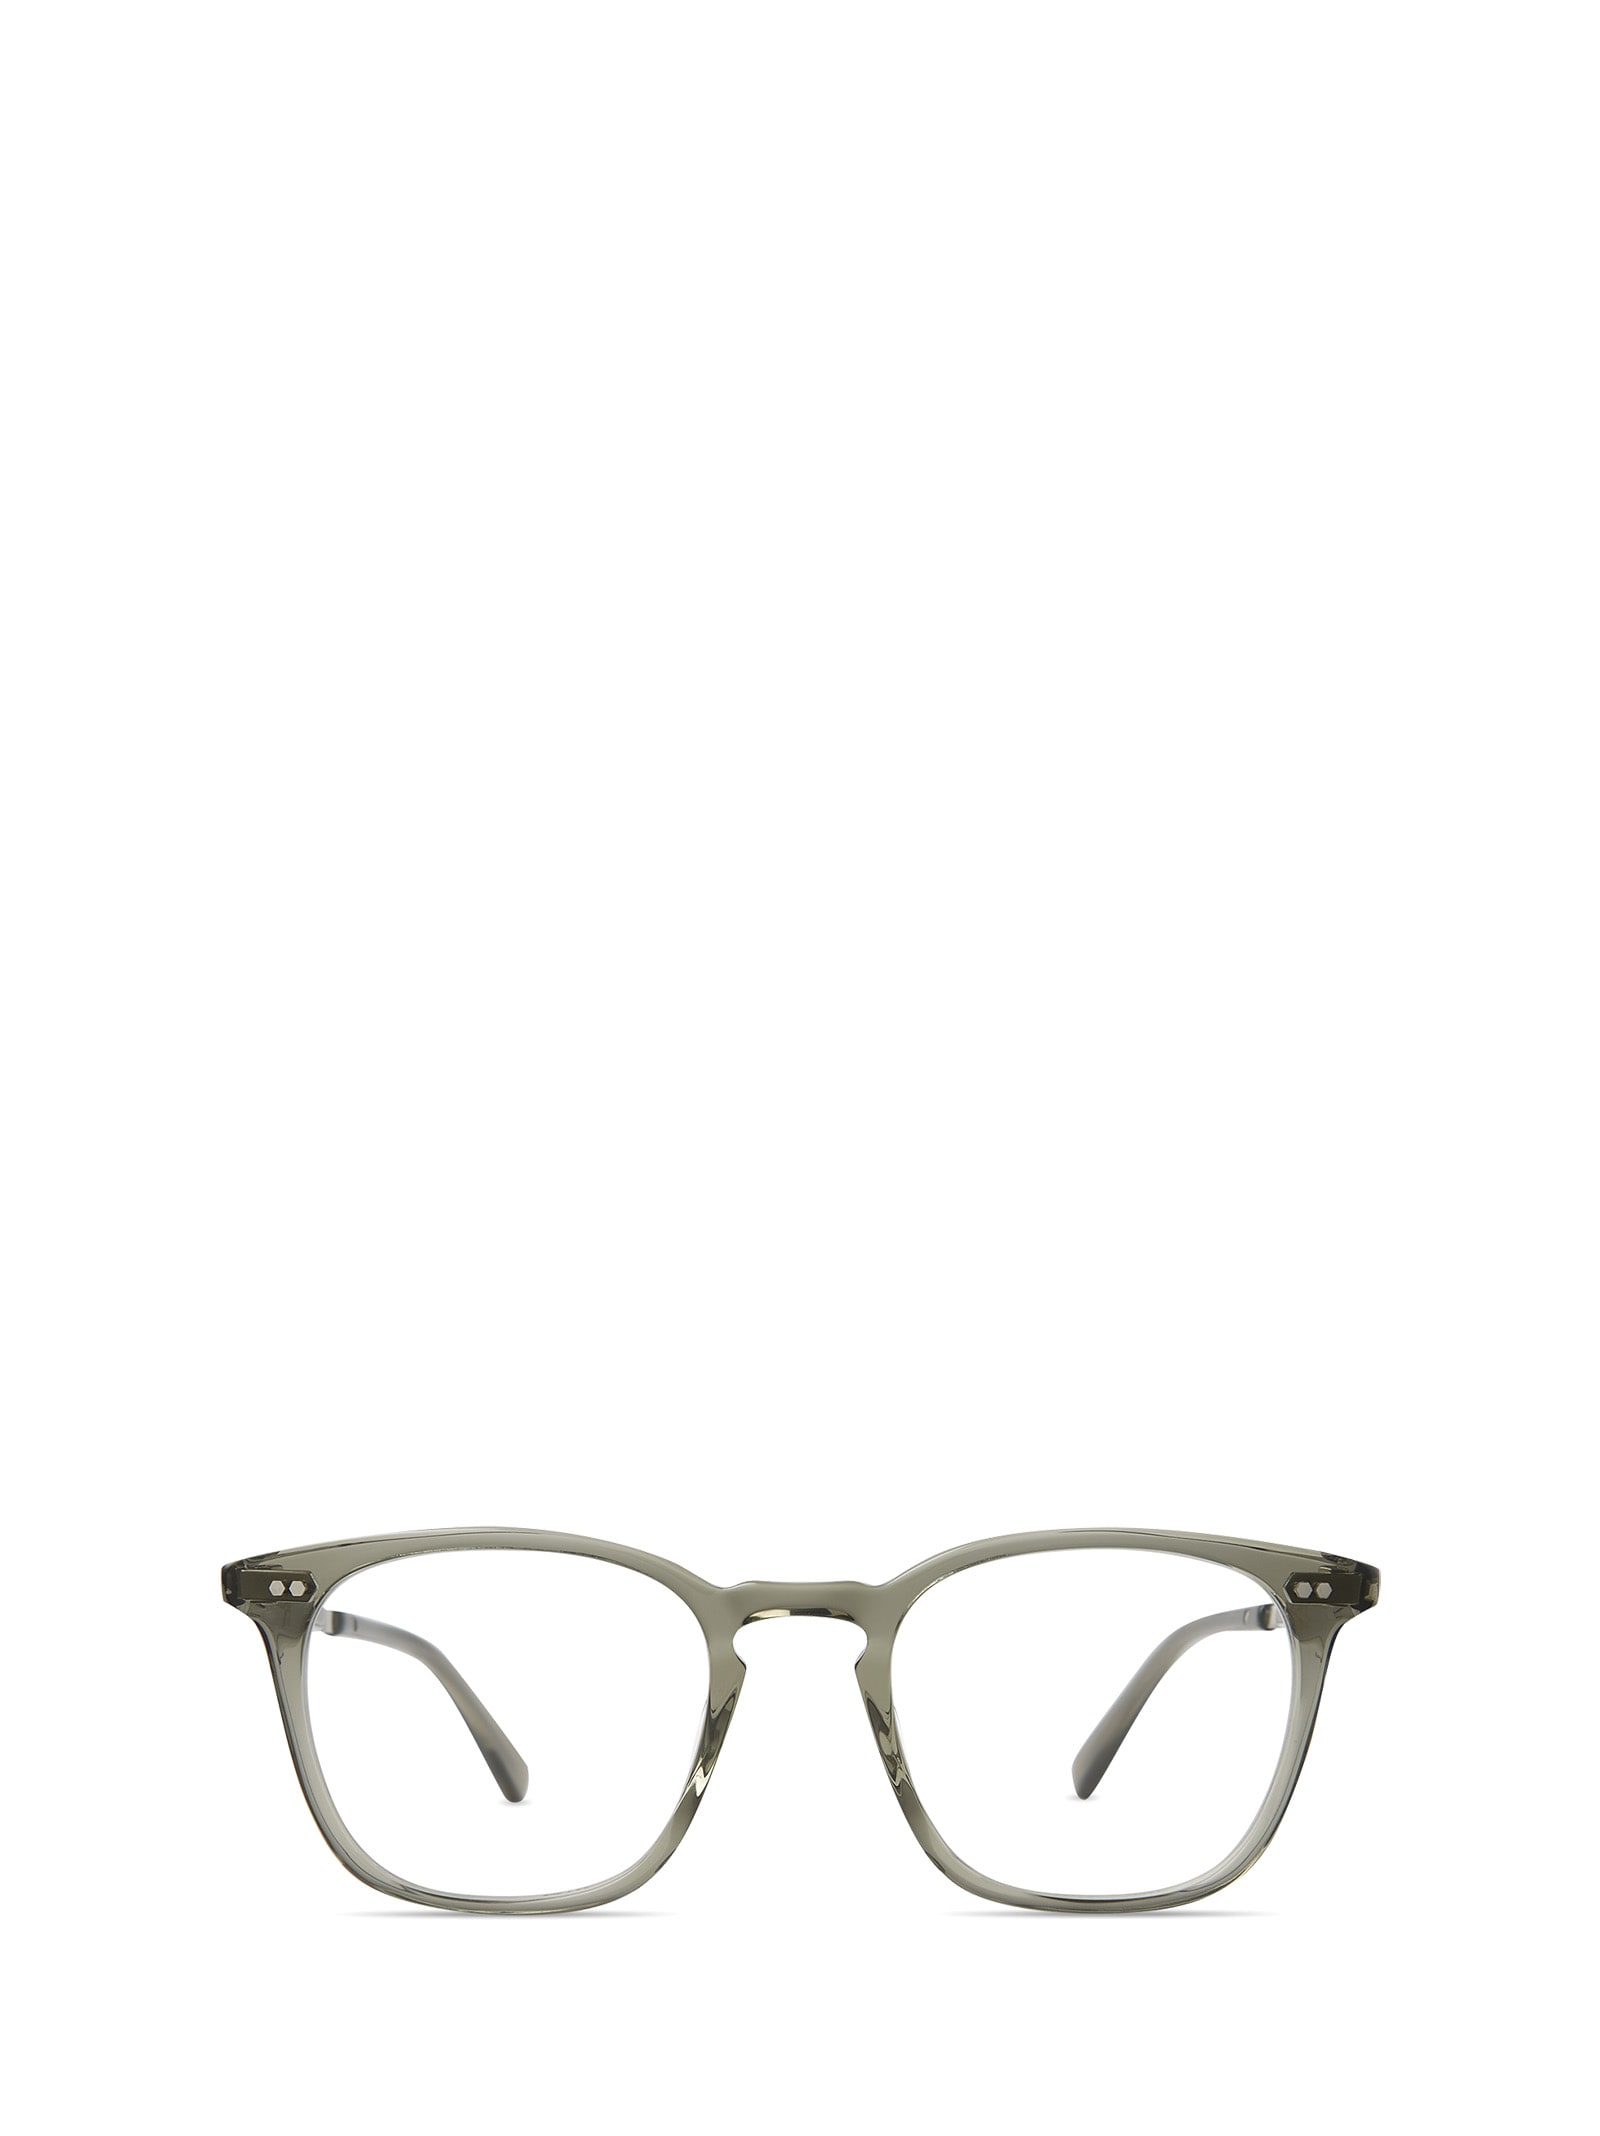 Mr Leight Getty C Hunter-platinum Glasses